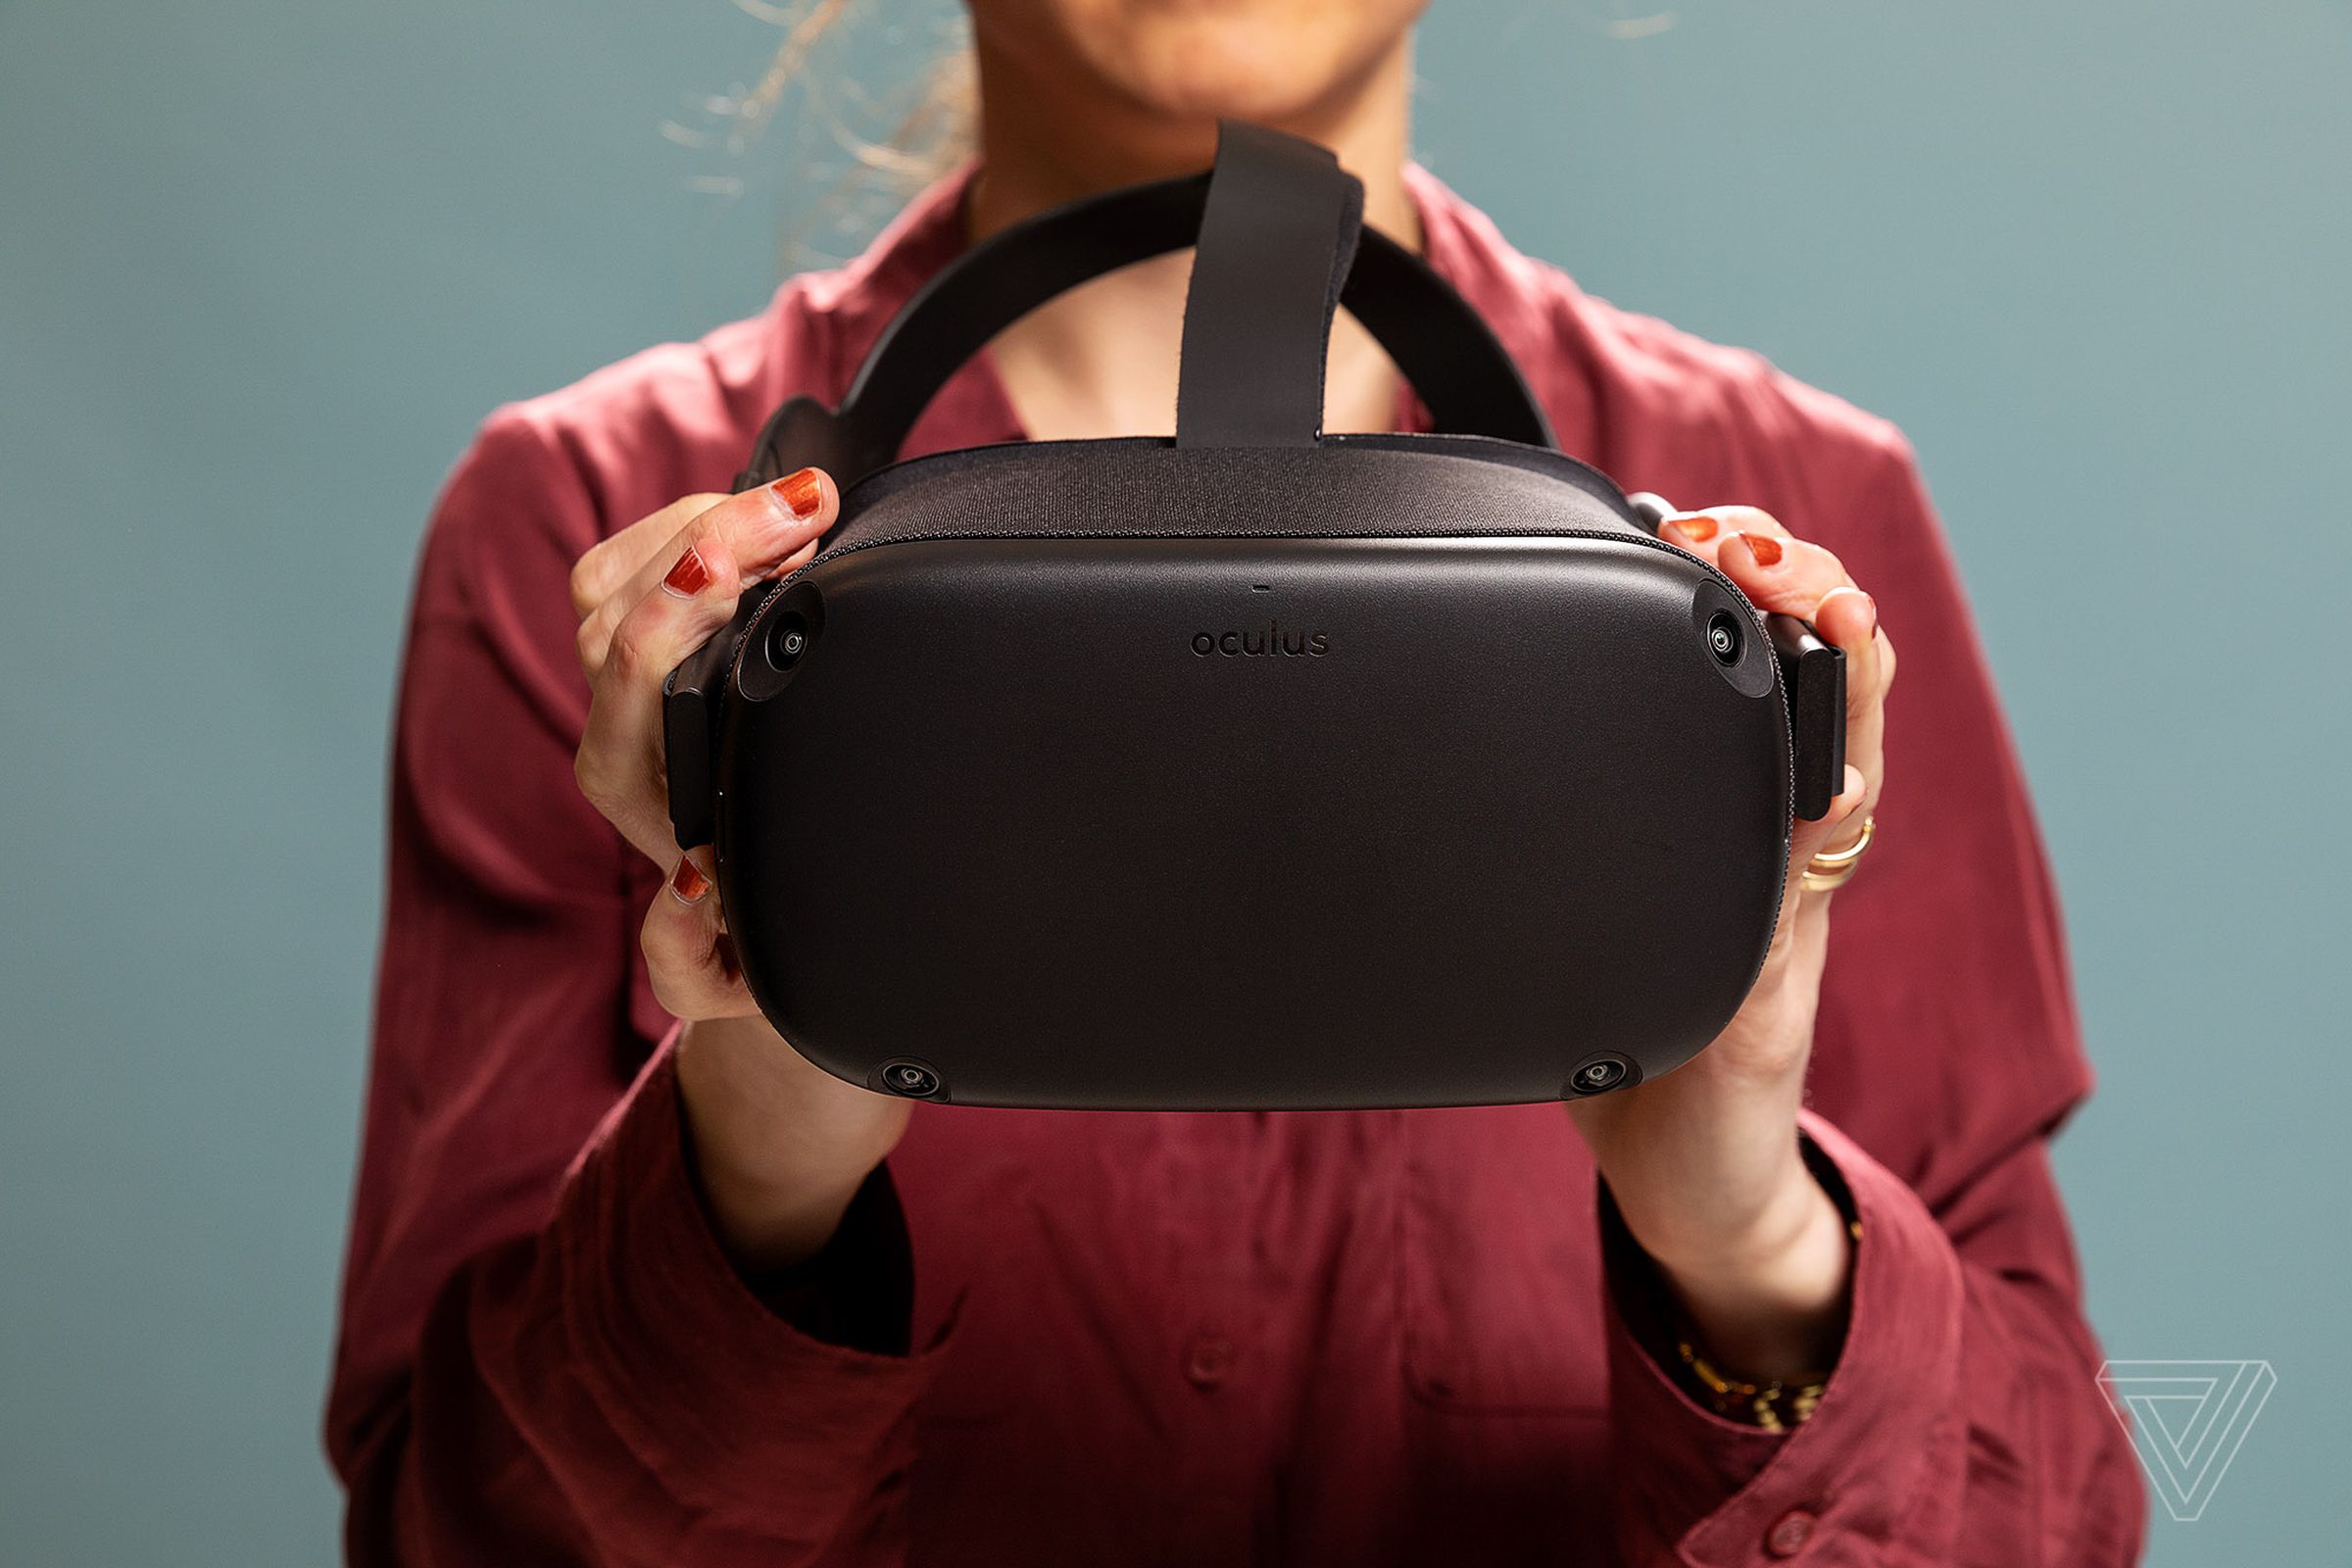 Quest 4 vr. VR Oculus Quest. Окулус шлем виртуальной реальности. Виртуальная реальность Окулус квест 2. Oculus Quest Headset.